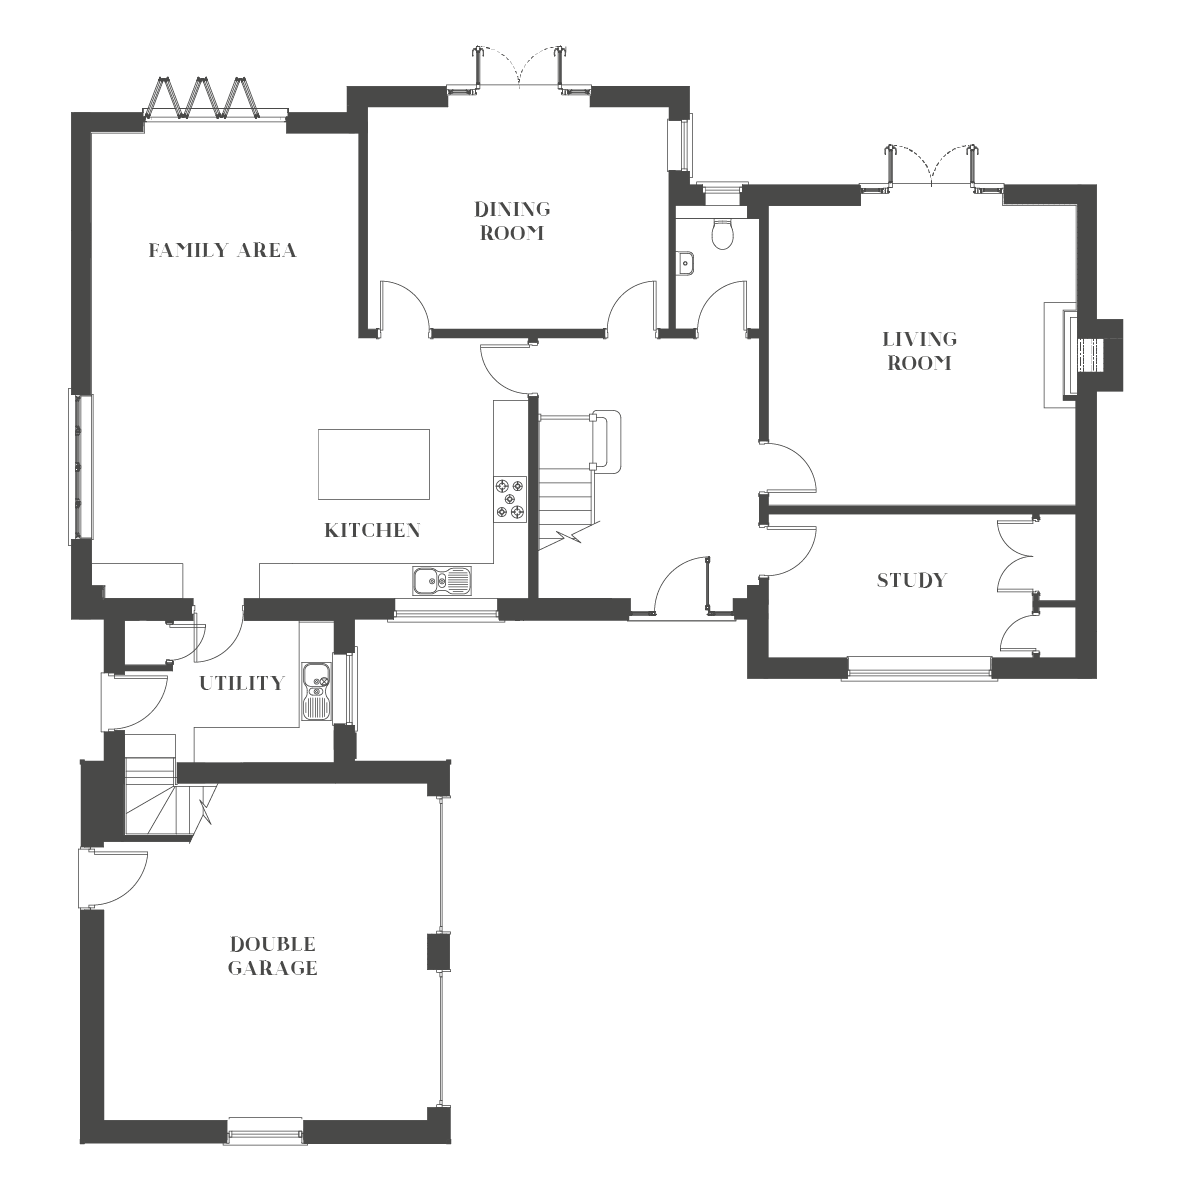 
        /cms/resources/plot-1-floor-plansground-floor-1.png
        